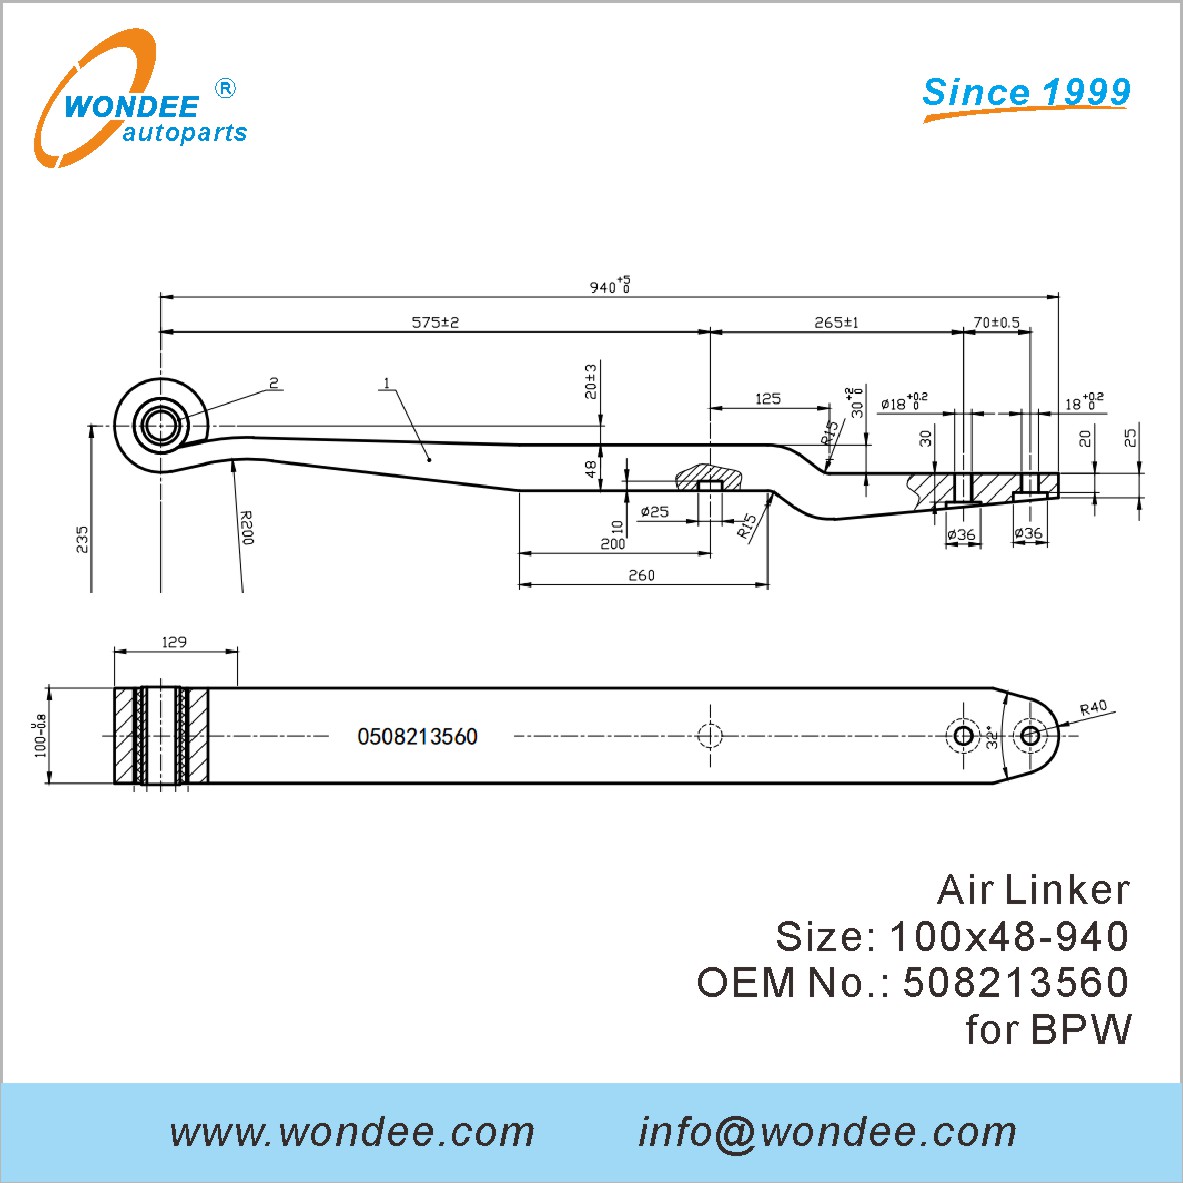 WONDEE Autoparts Air Linker OEM 508213560 for BPW